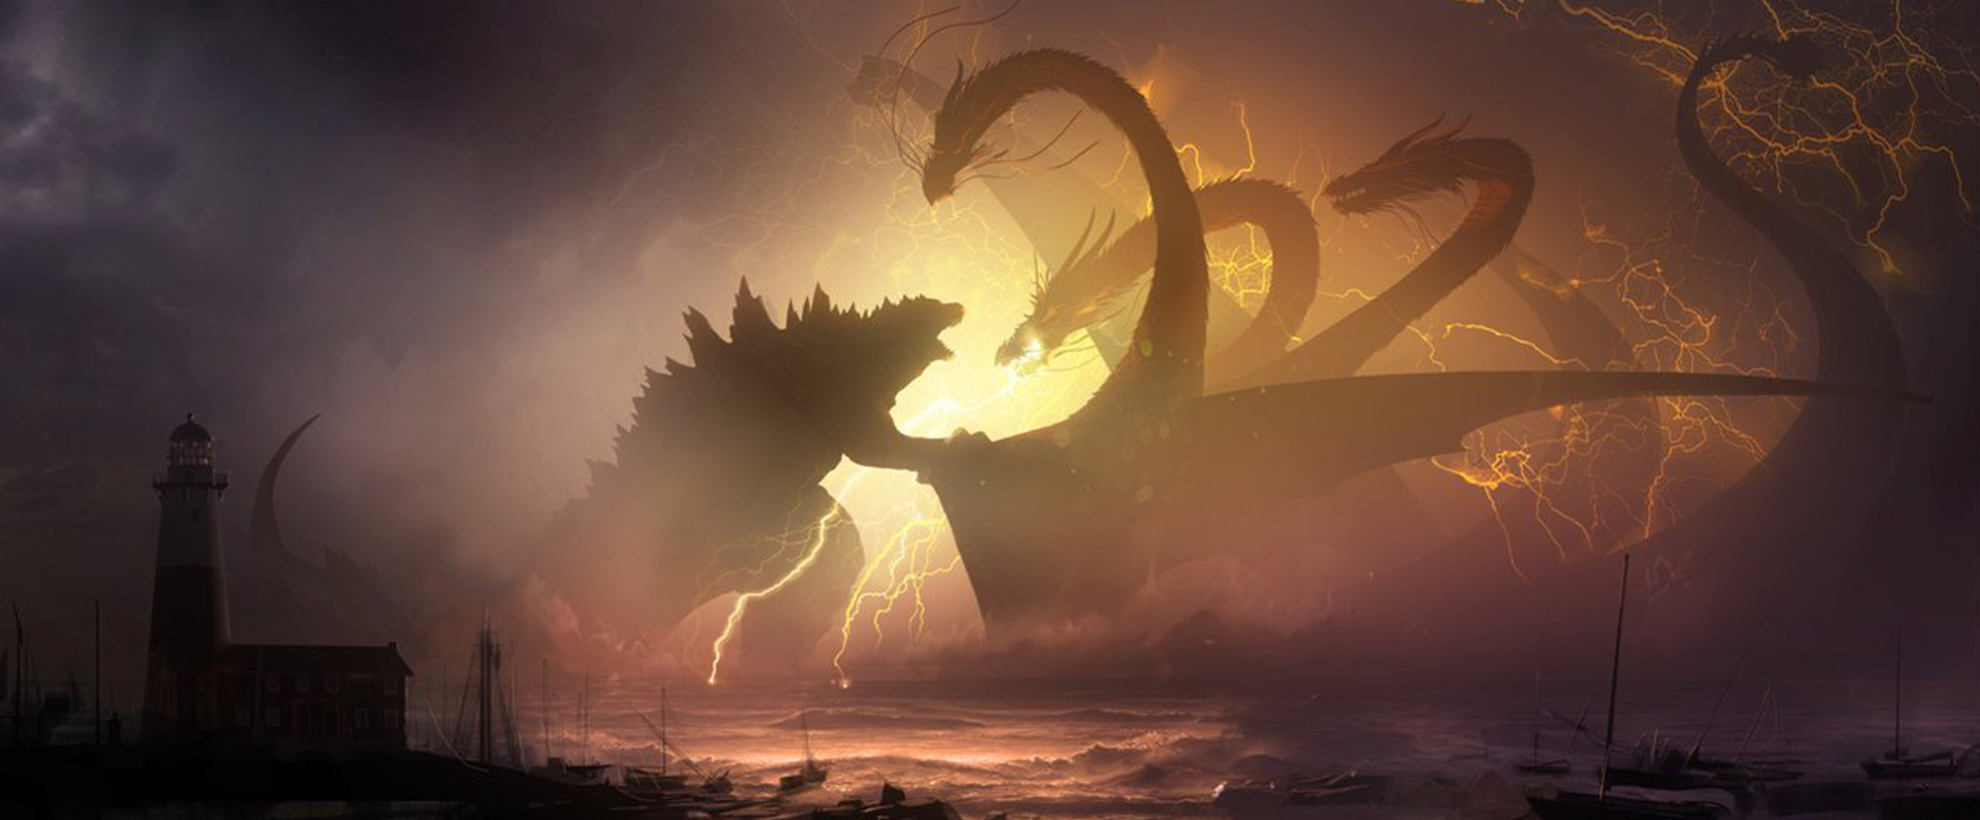 Godzilla fights a 3 headed dragon like creature